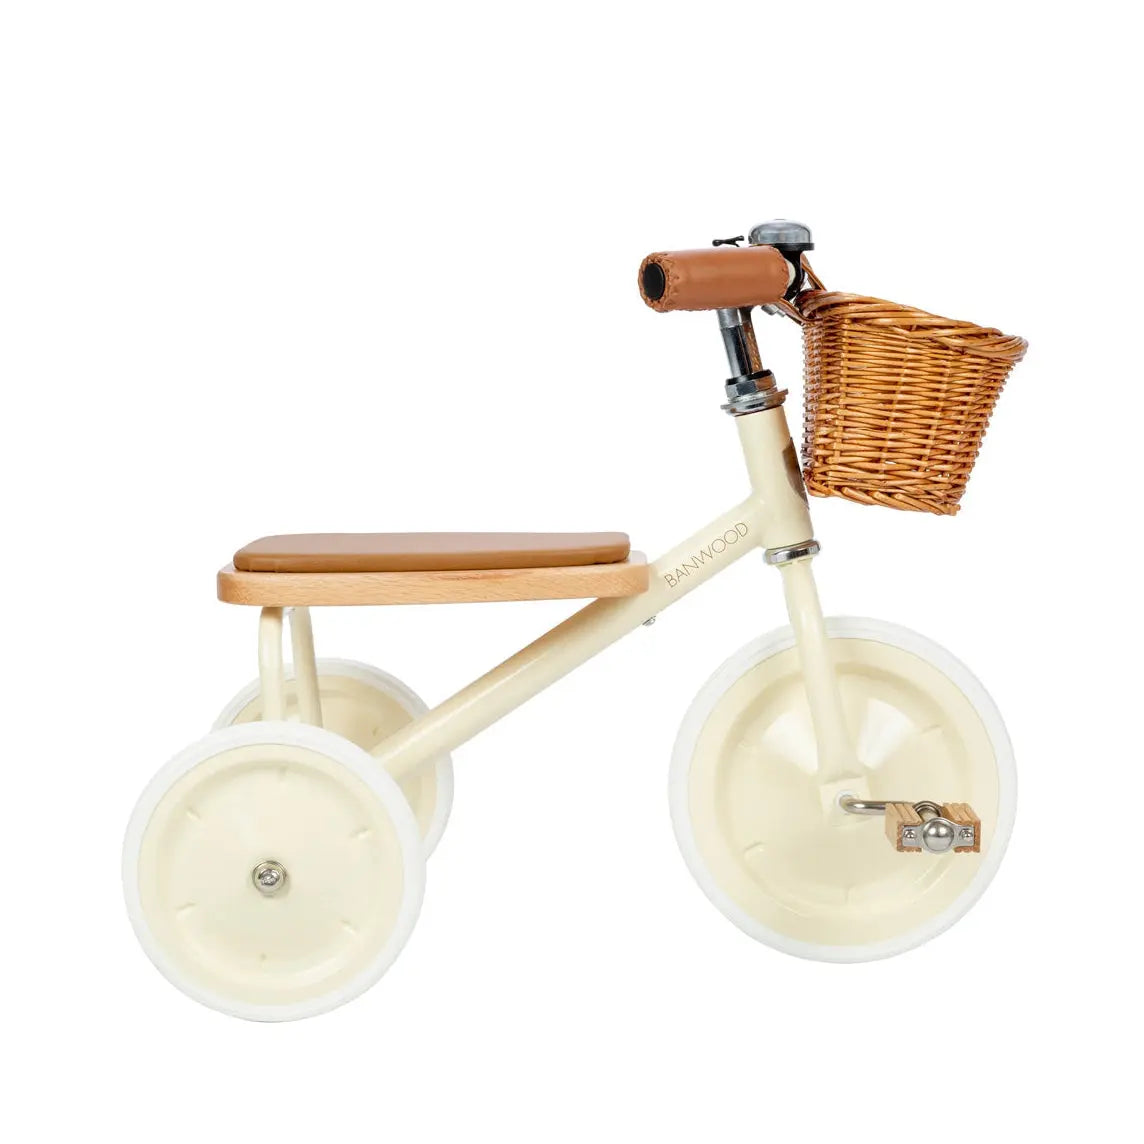 Banwood Trike